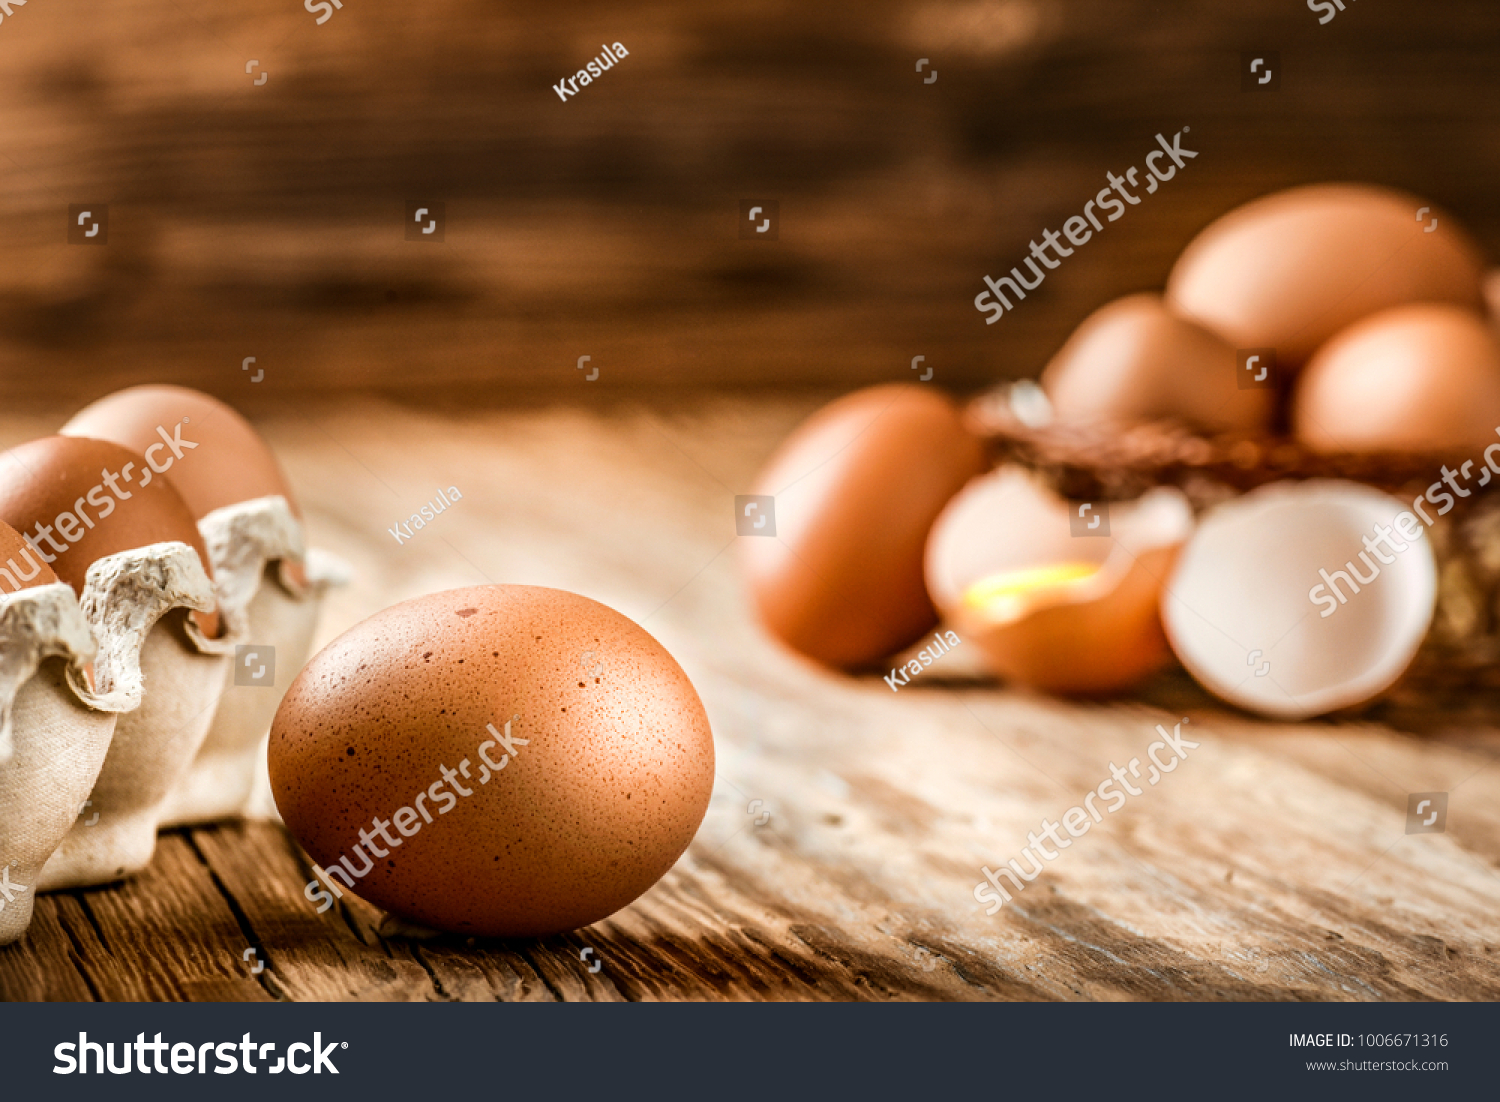 Brown eggs in carton box. Broken egg with yolk in background.  #1006671316